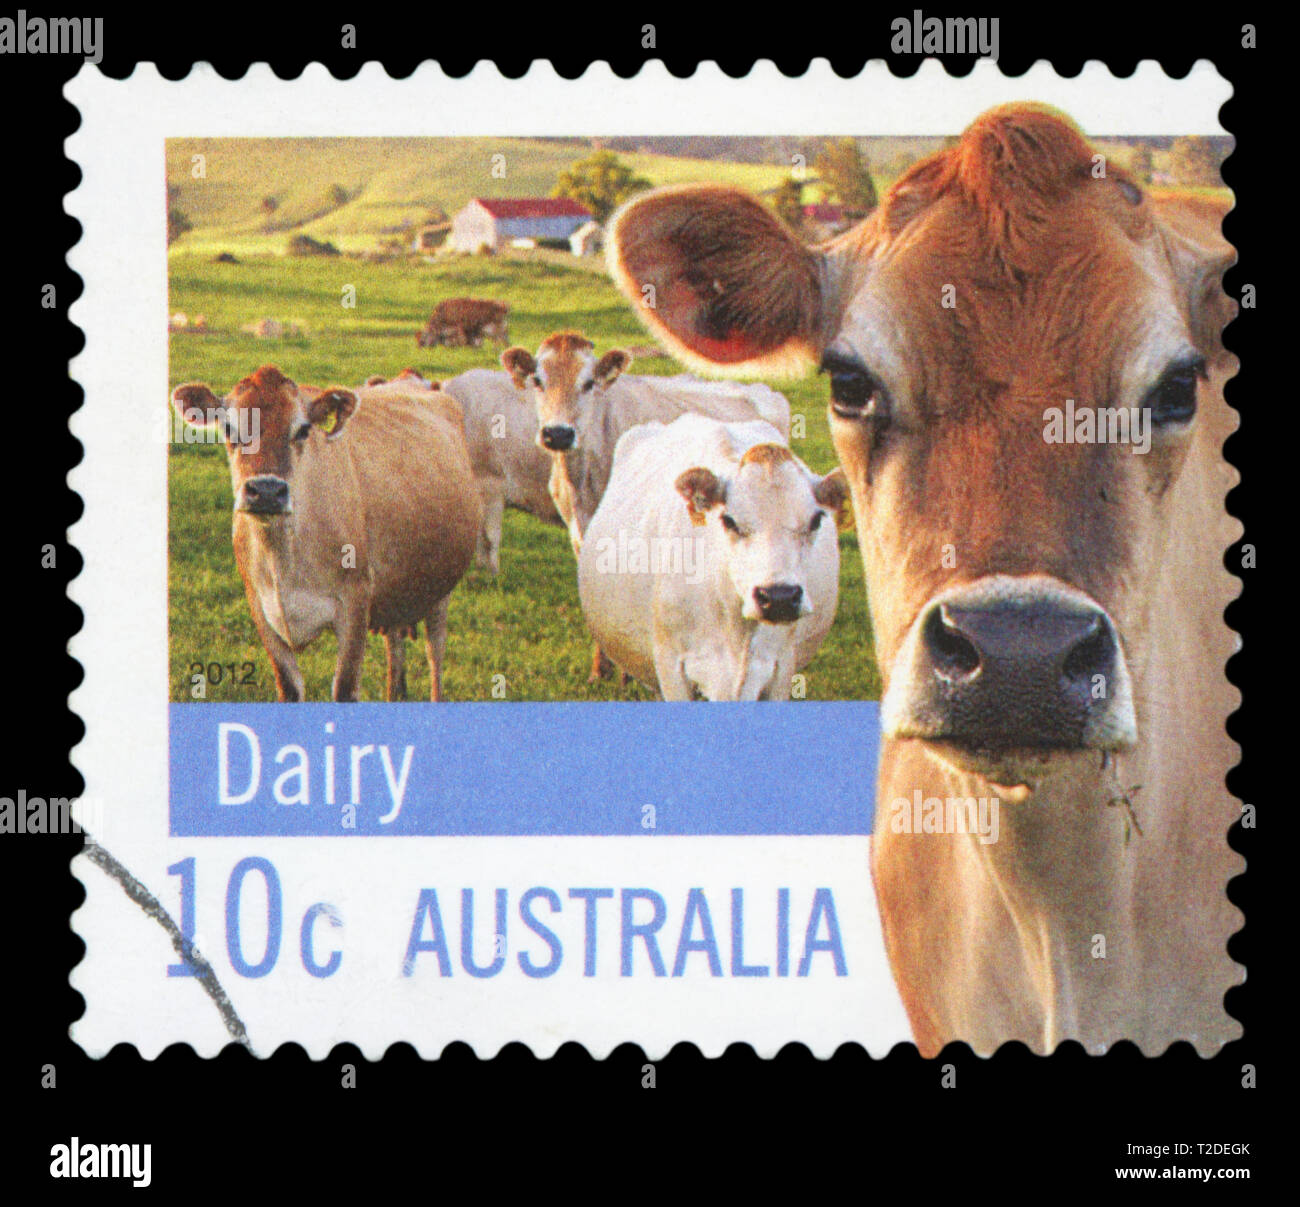 Australien - ca. 2012: einen Stempel in Australien gedruckt Landwirtschaft Australien engagiert zeigt, Molkerei, ca. 2012 Stockfoto